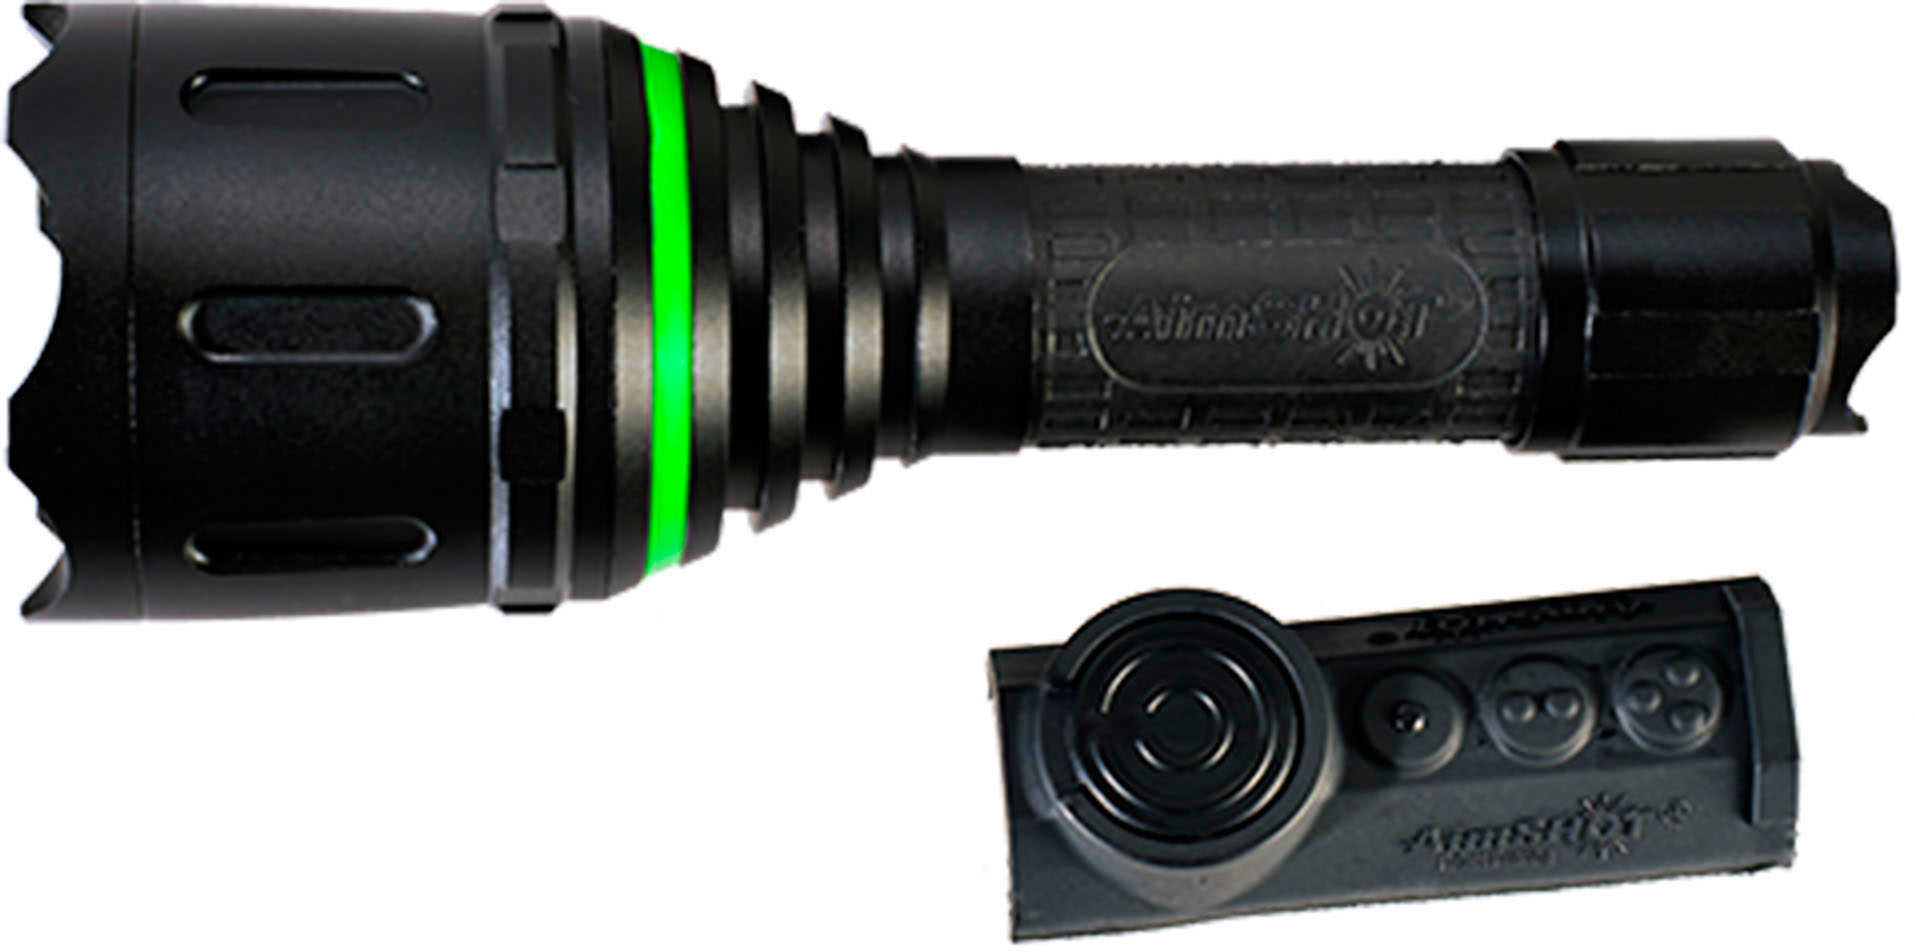 Aimshot TZ980- Grains Adjust. Beam Wireless Green Flashlight Kit